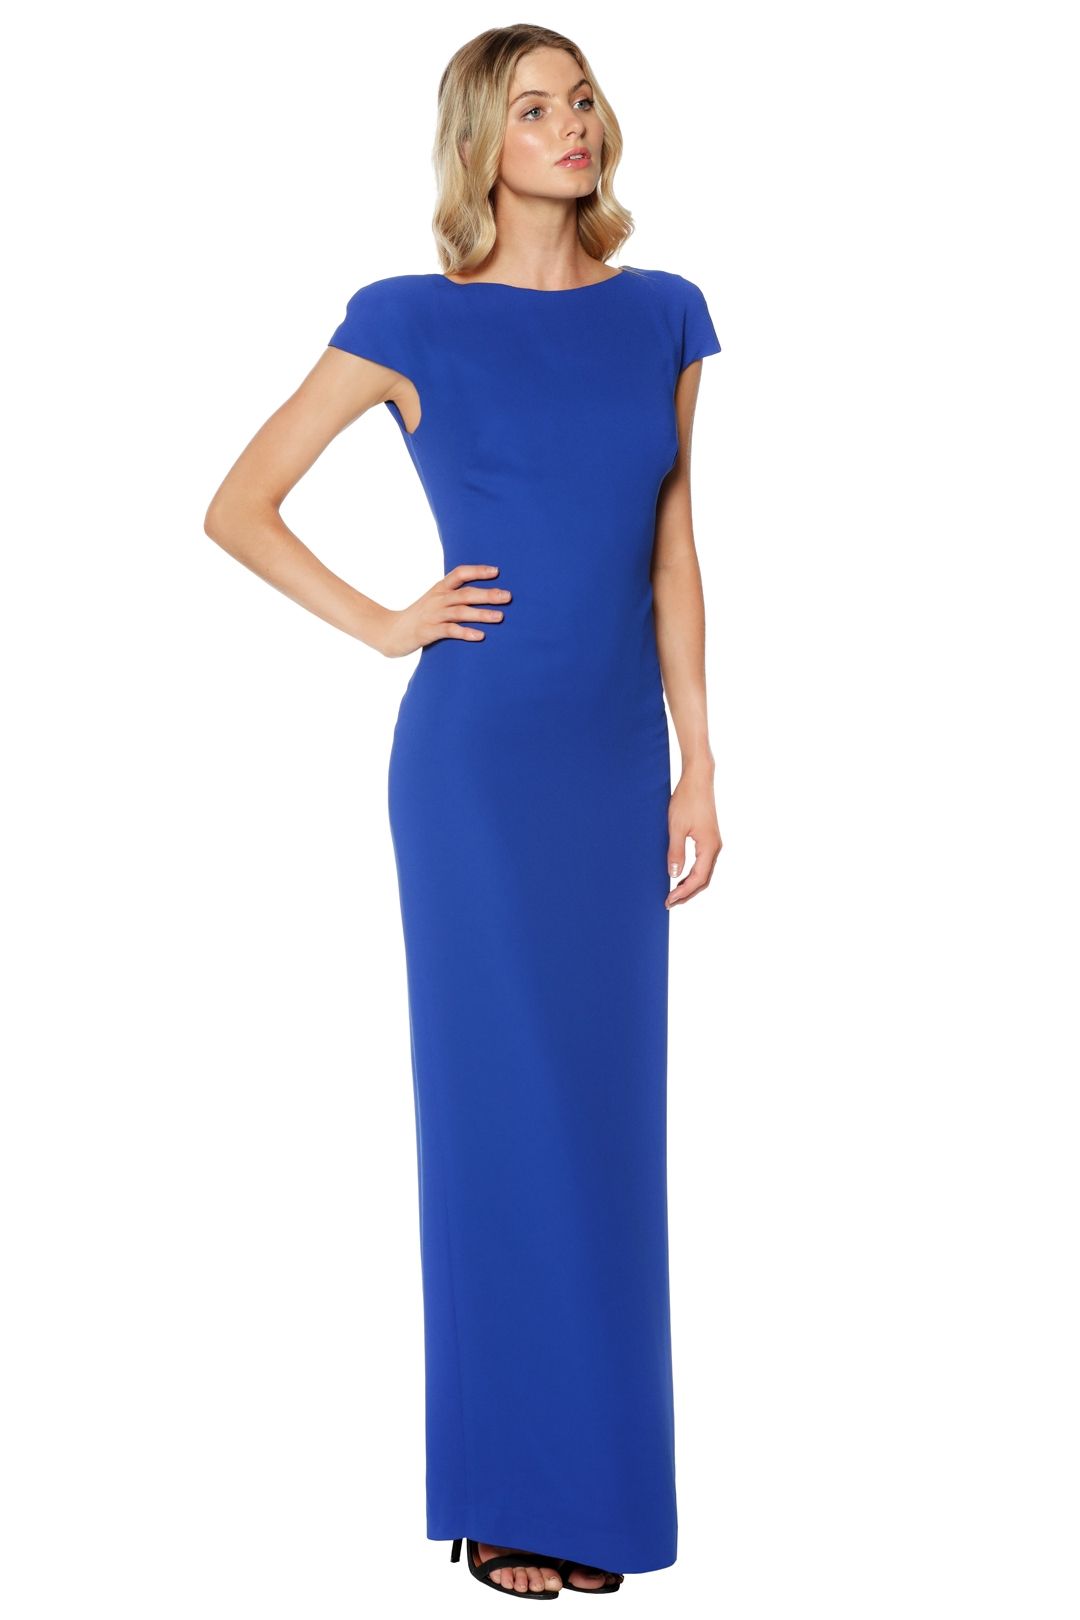 Carla Zampatti - Royal Diamond Cut Out Maxi Dress - Blue - Side